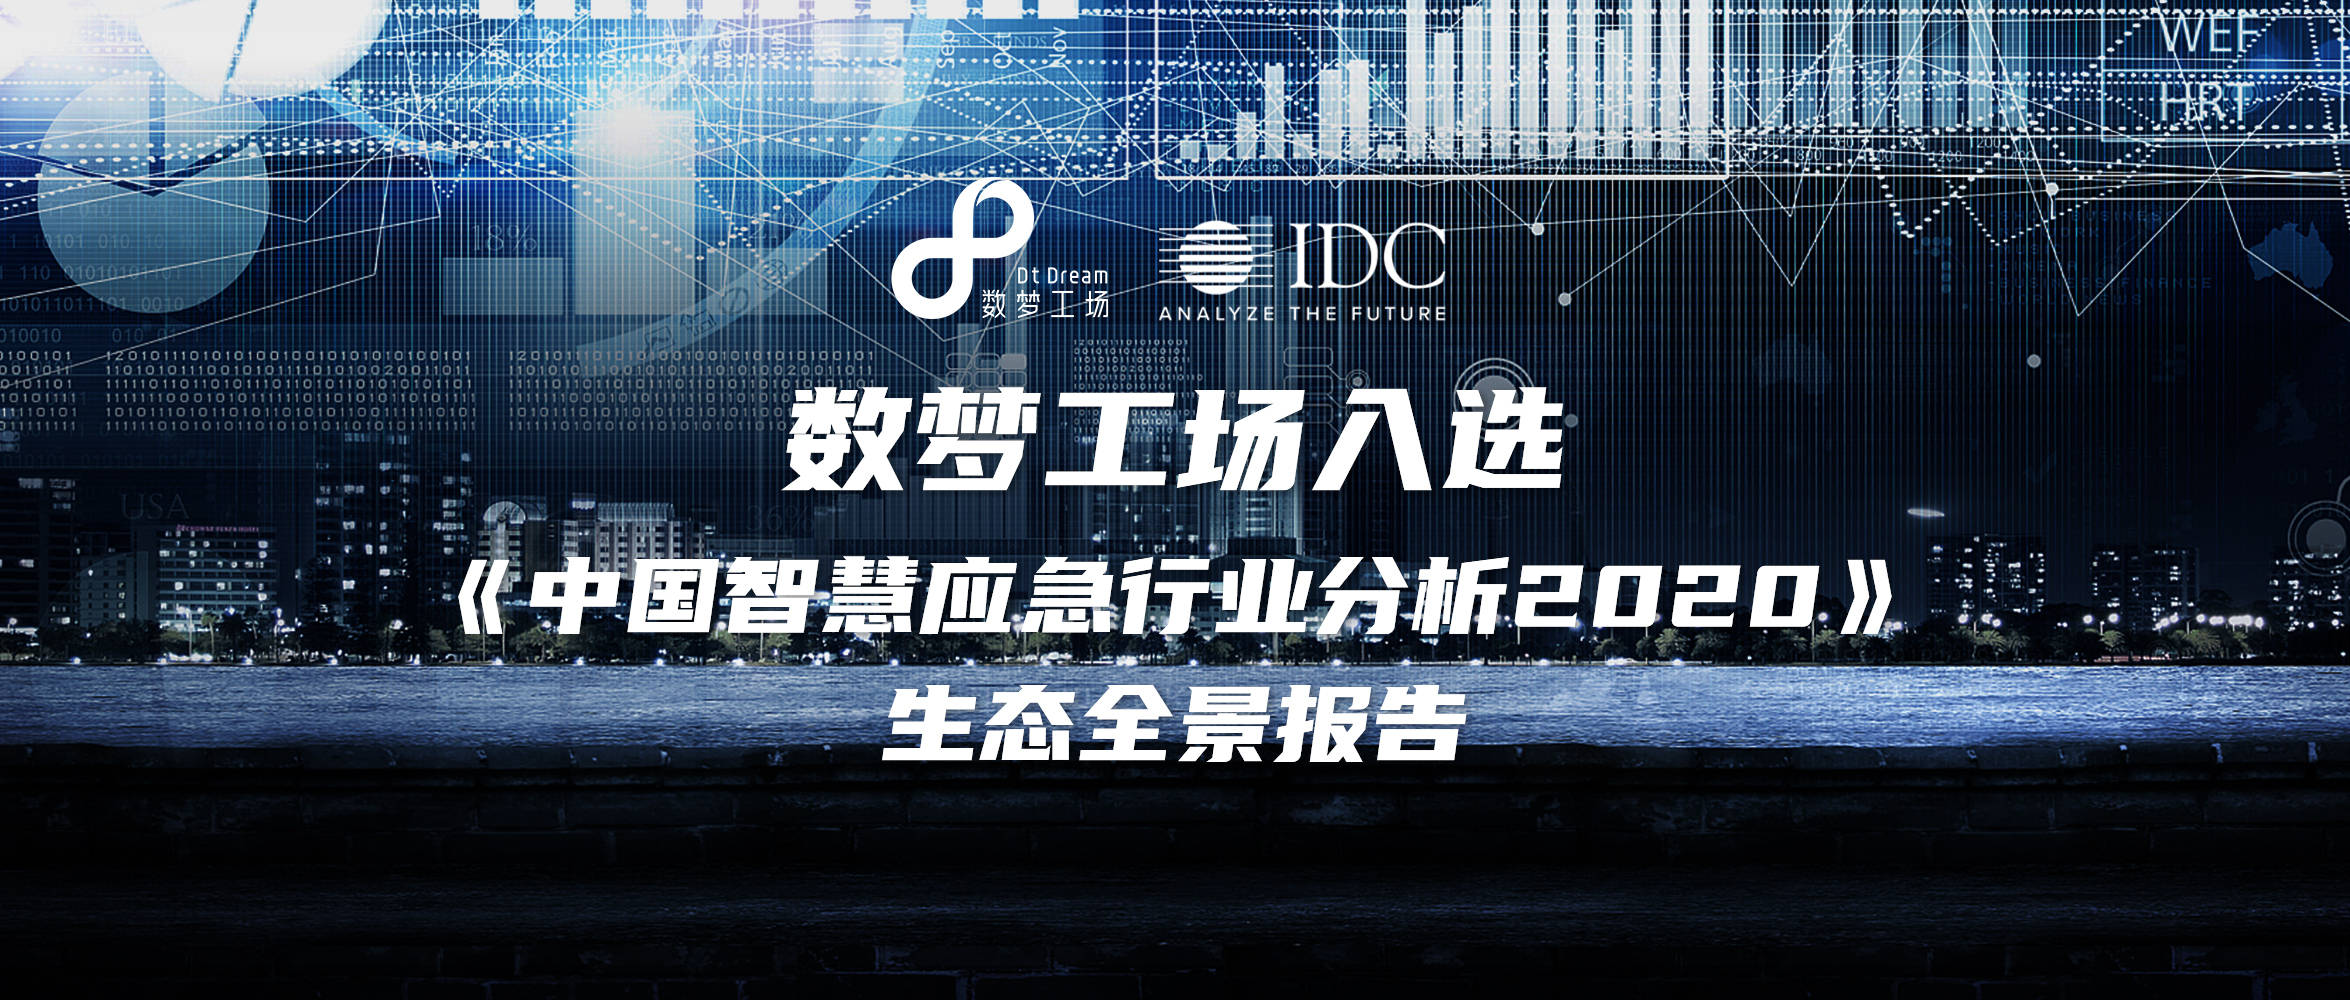 Top|应急大数据Top1 | 数梦工场入选IDC《中国智慧应急行业分析2020》生态全景报告